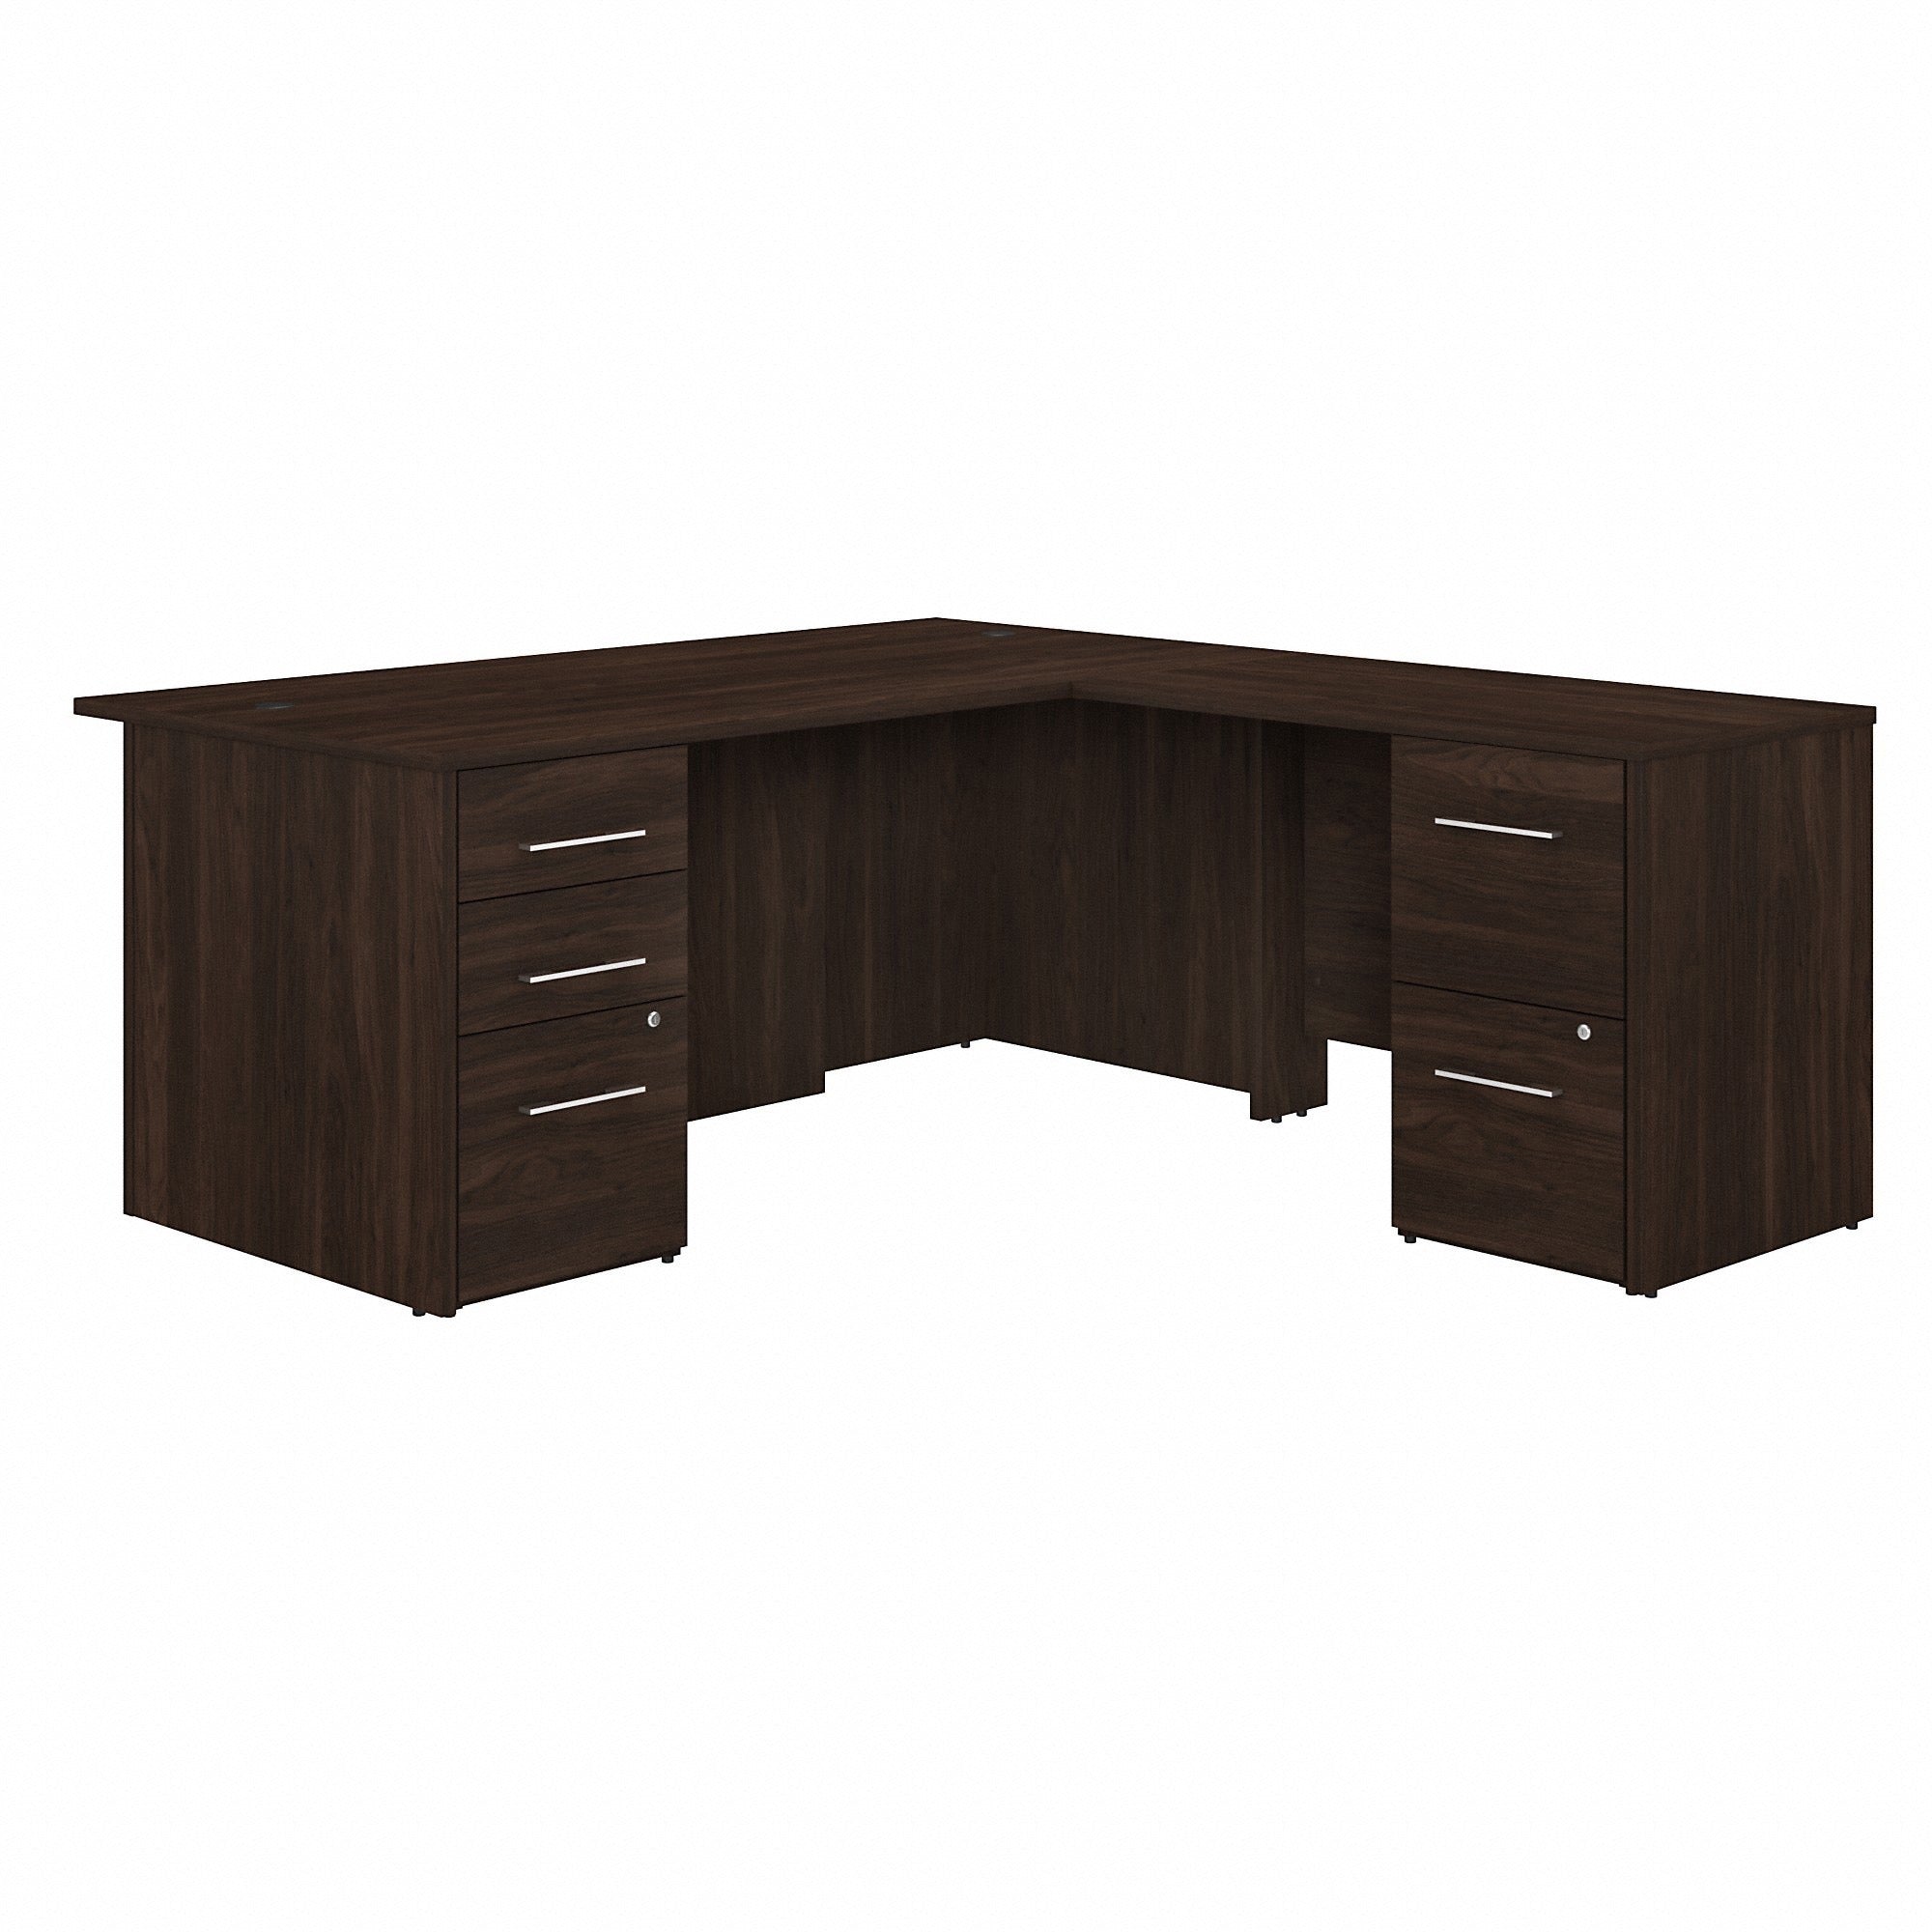 Bush Business Furniture Office 500 Black Walnut Desk - 77.1" x 71"29.8" - 5 x File, Box Drawer(s) - Finish: Black Walnut, Thermofused Laminate (TFL) - 1